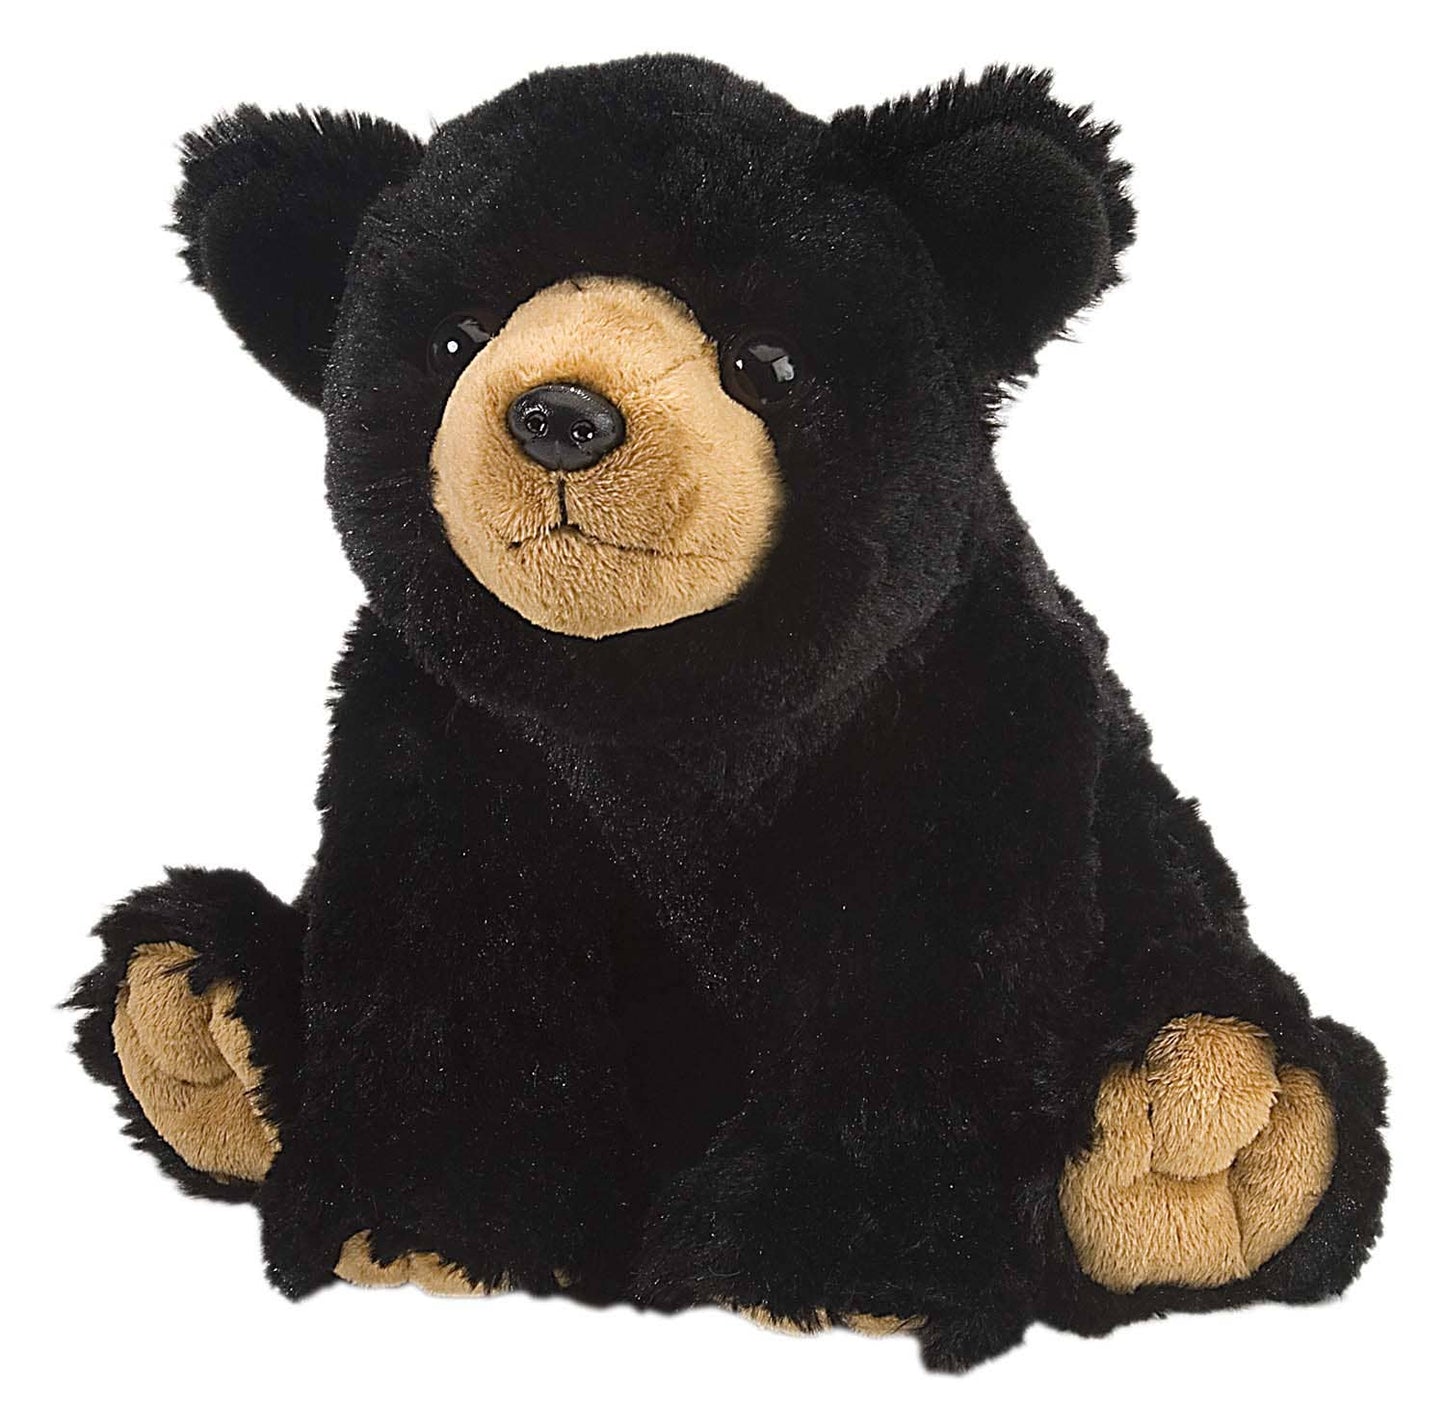 12" Stuffed Animal | Black Bear